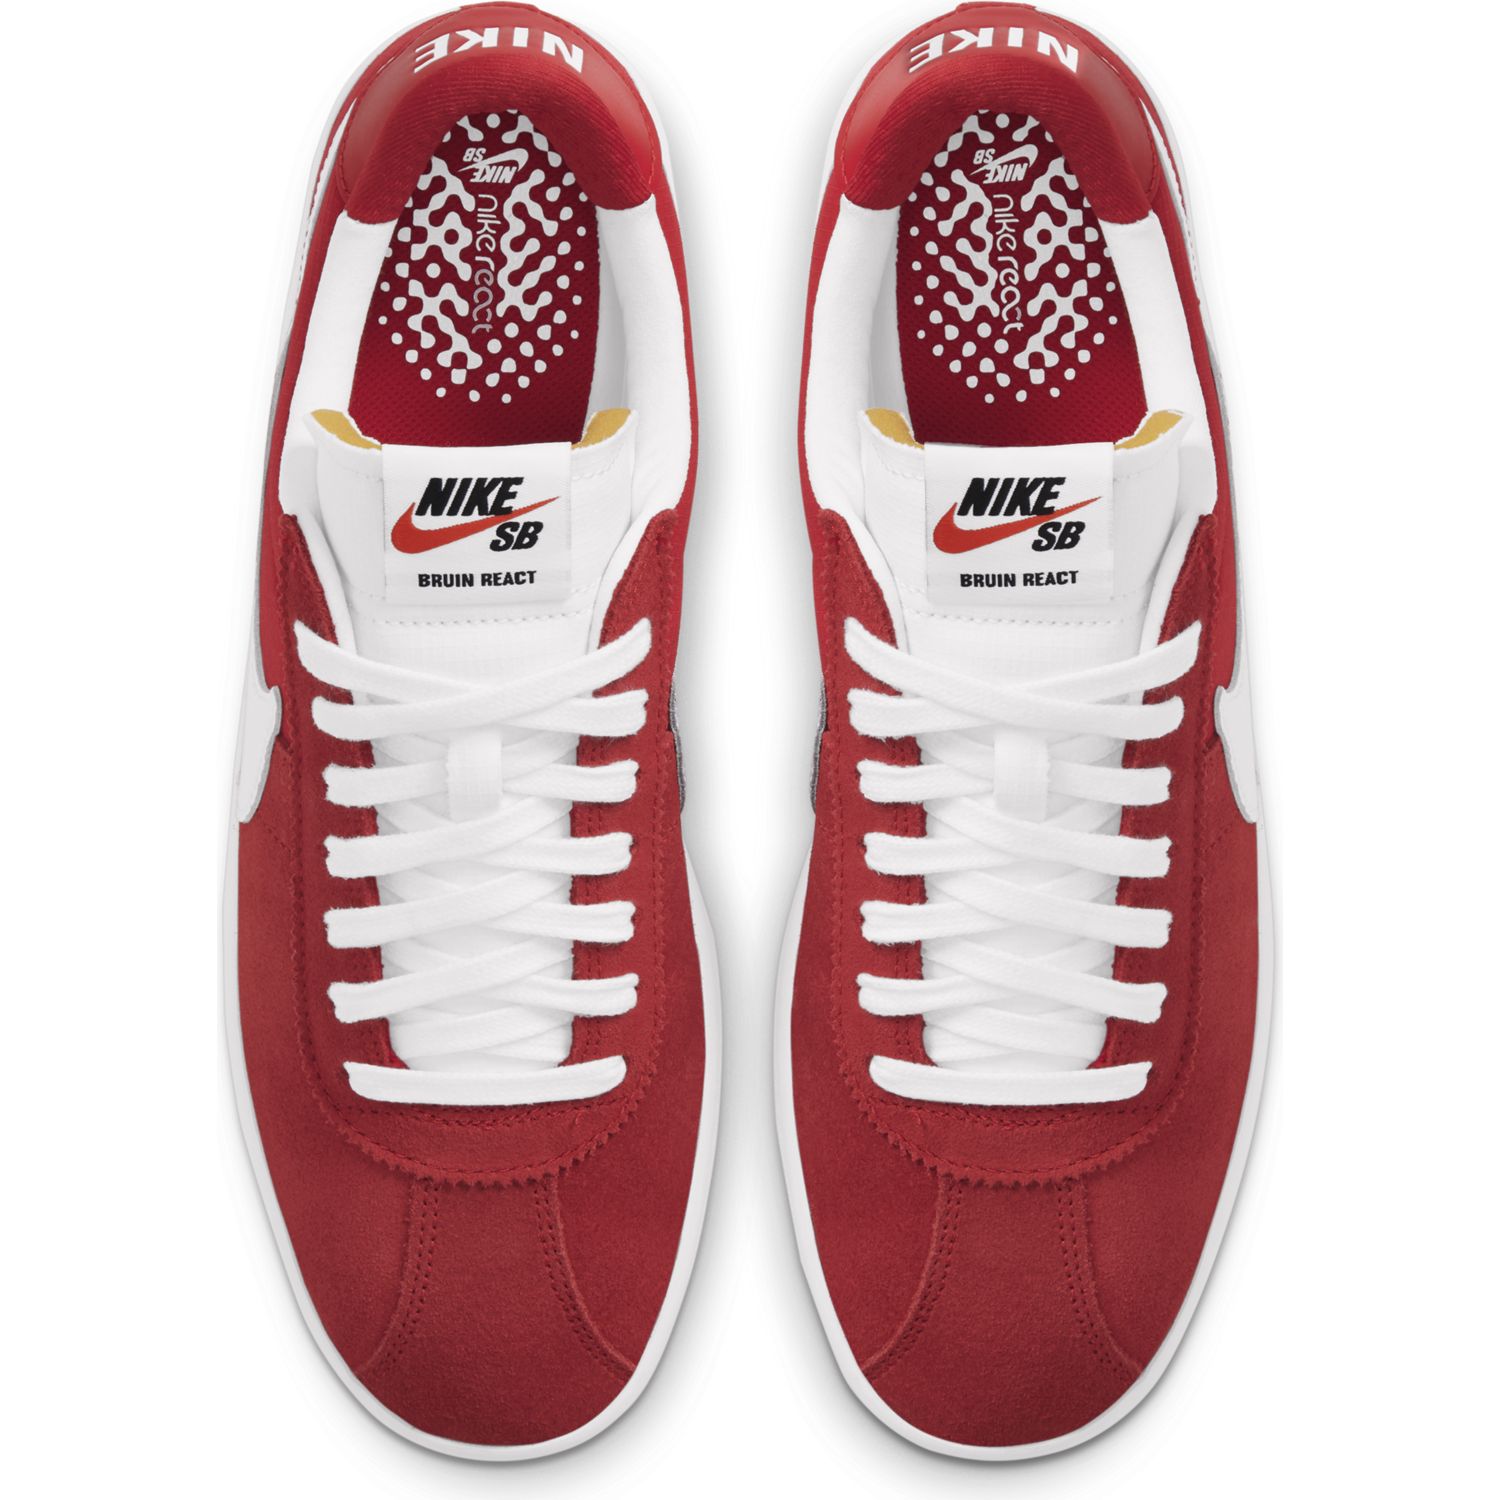 Nike SB Bruin React 09